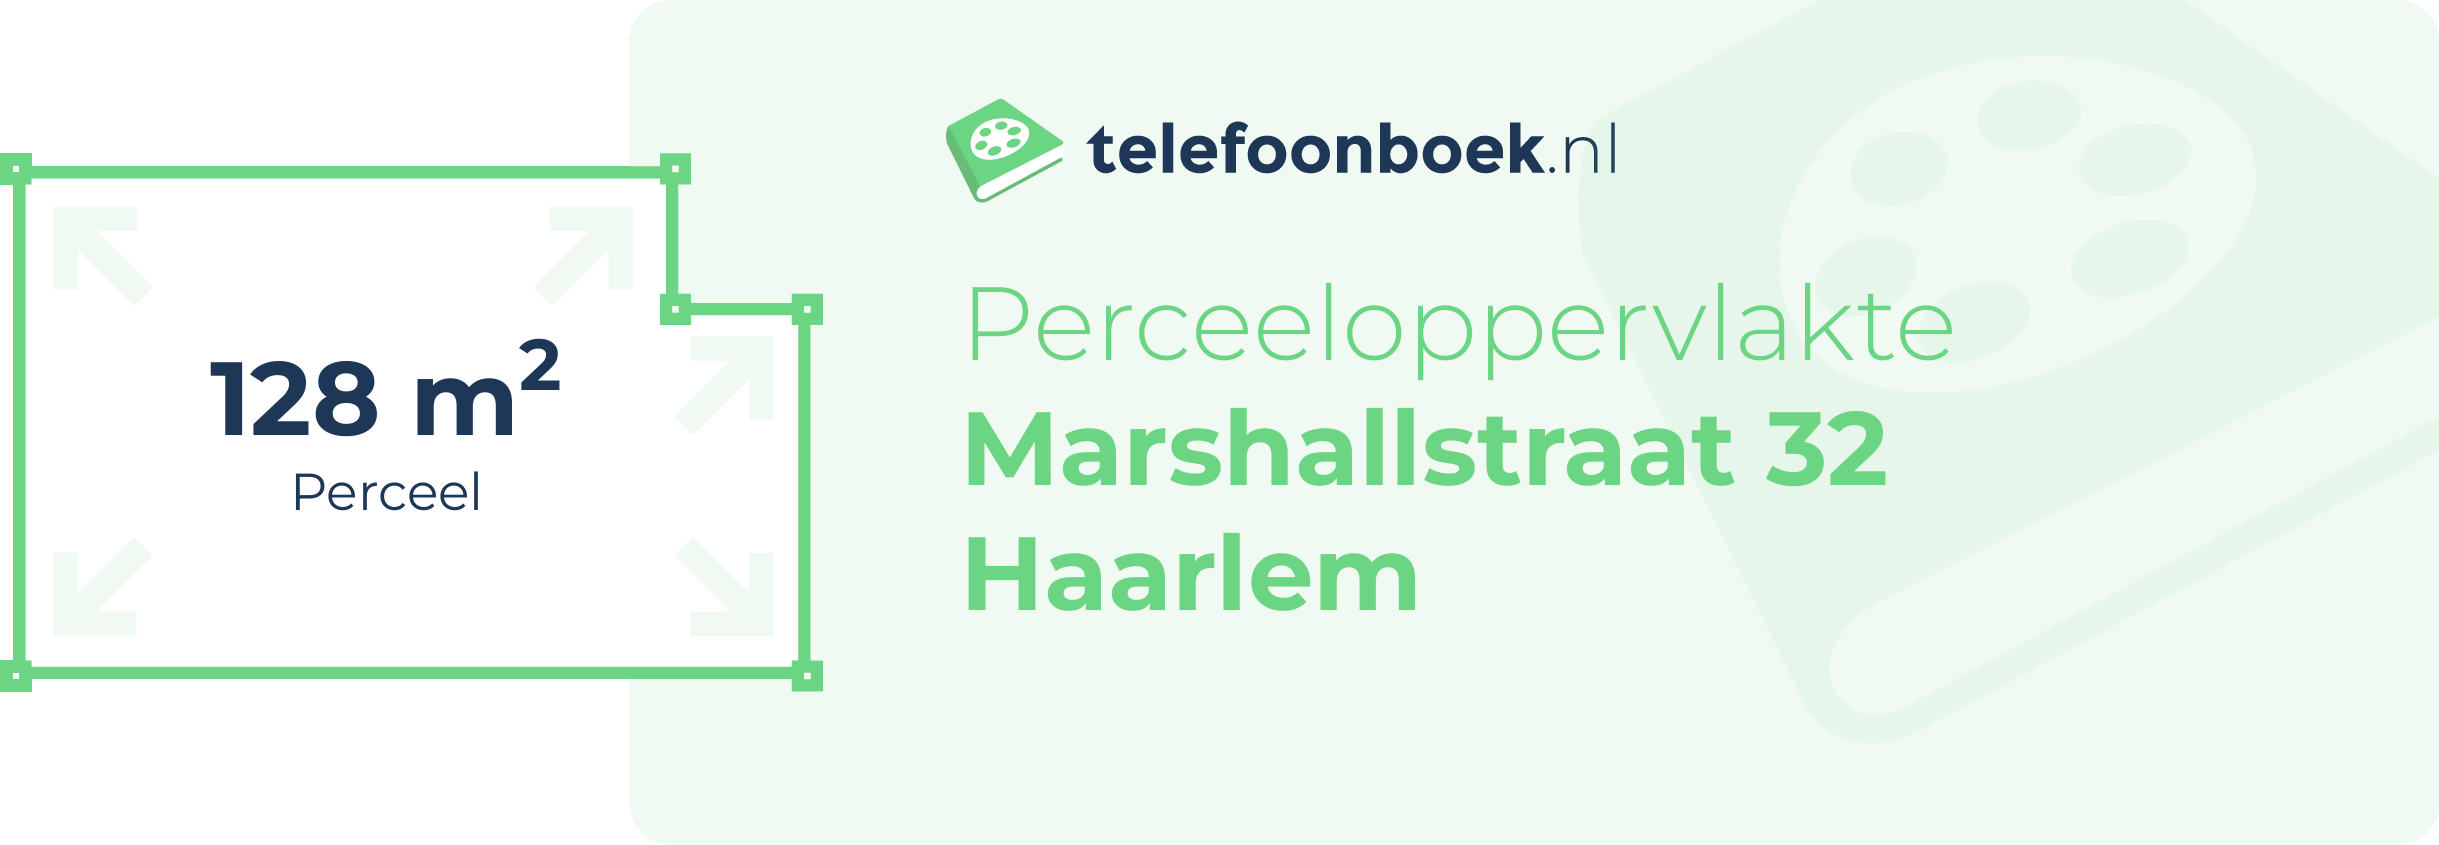 Perceeloppervlakte Marshallstraat 32 Haarlem